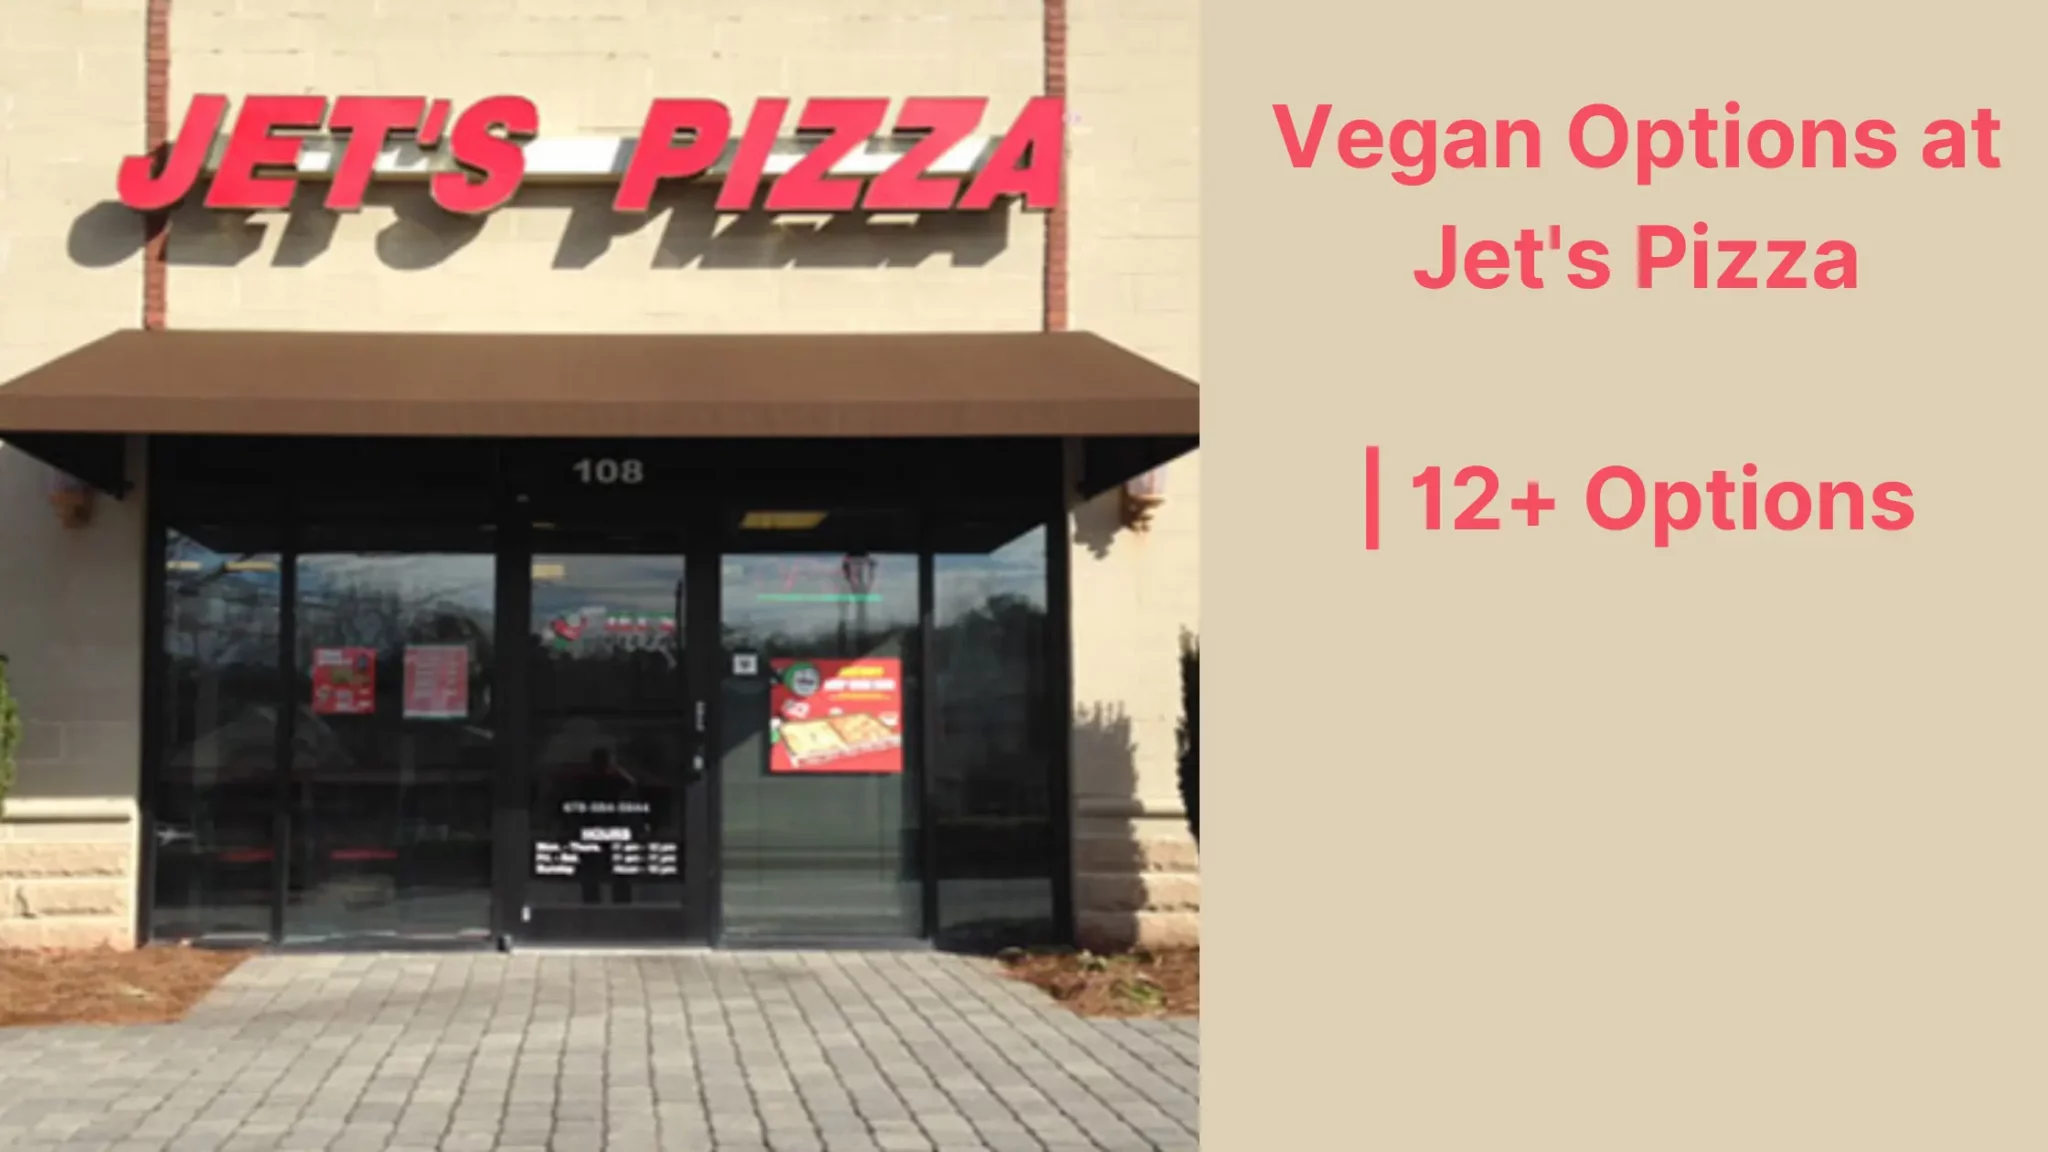 Vegan Options at Jet's Pizza